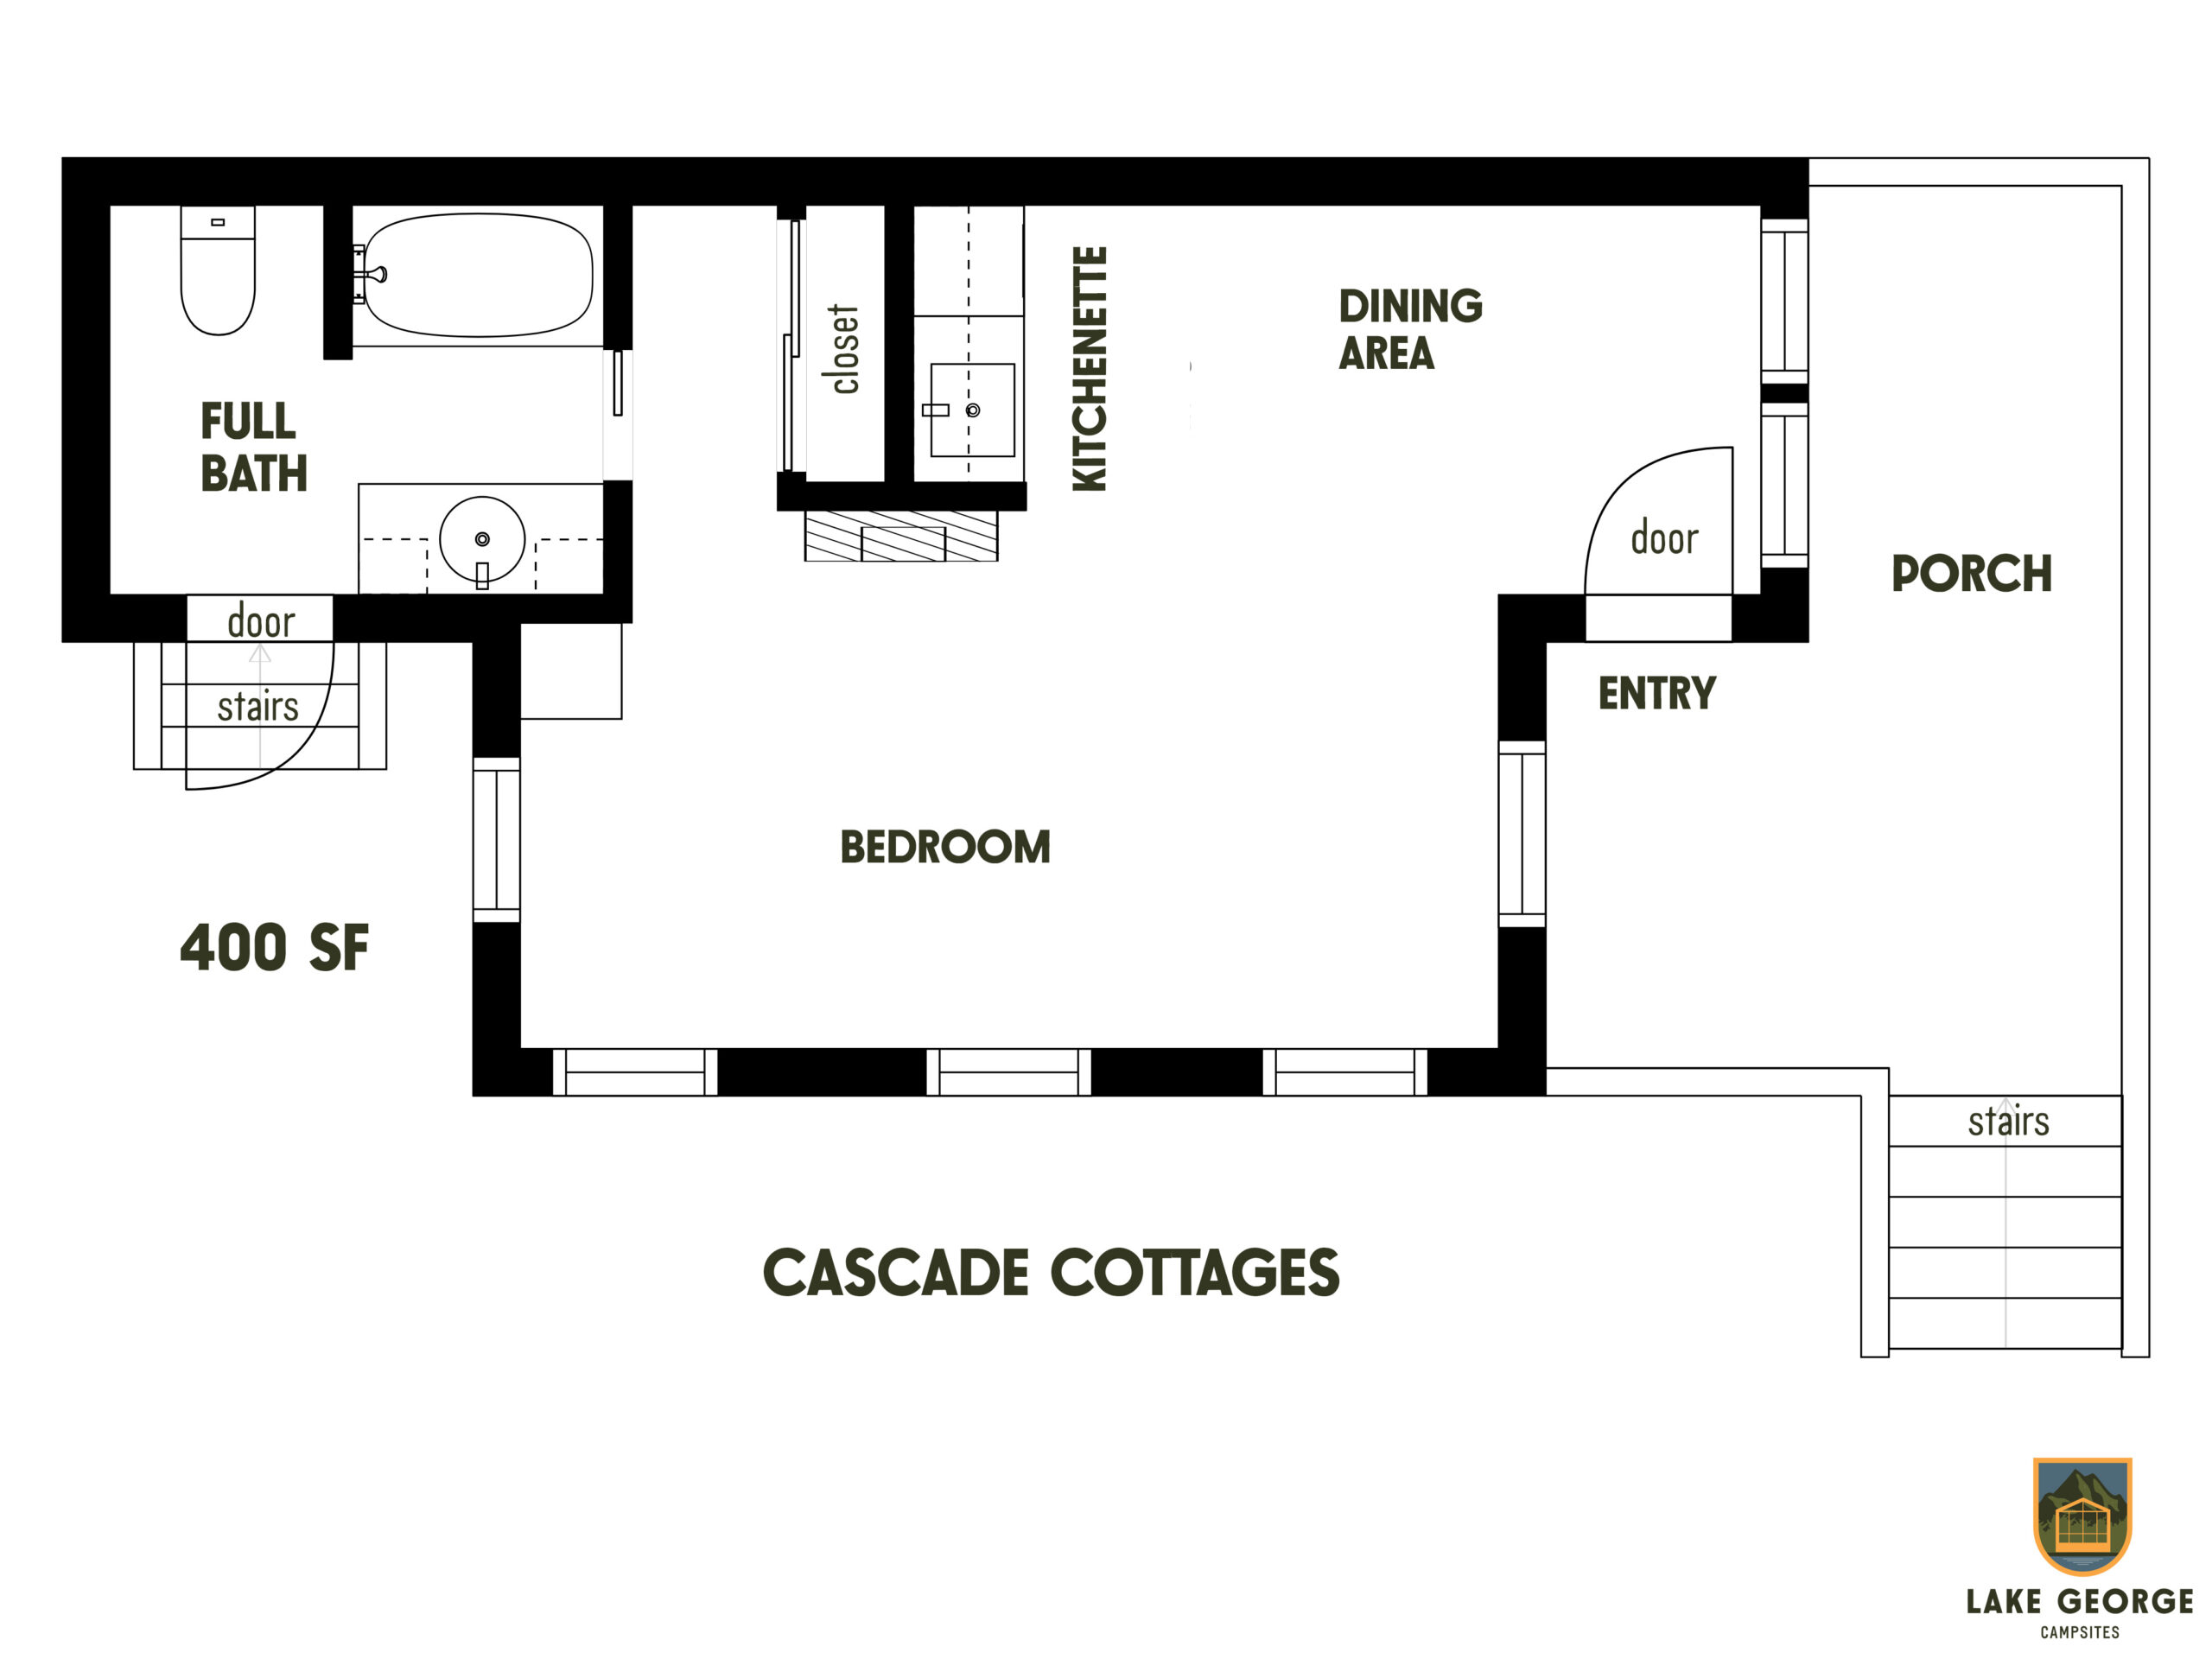 Cascade-cottages-floor-plan